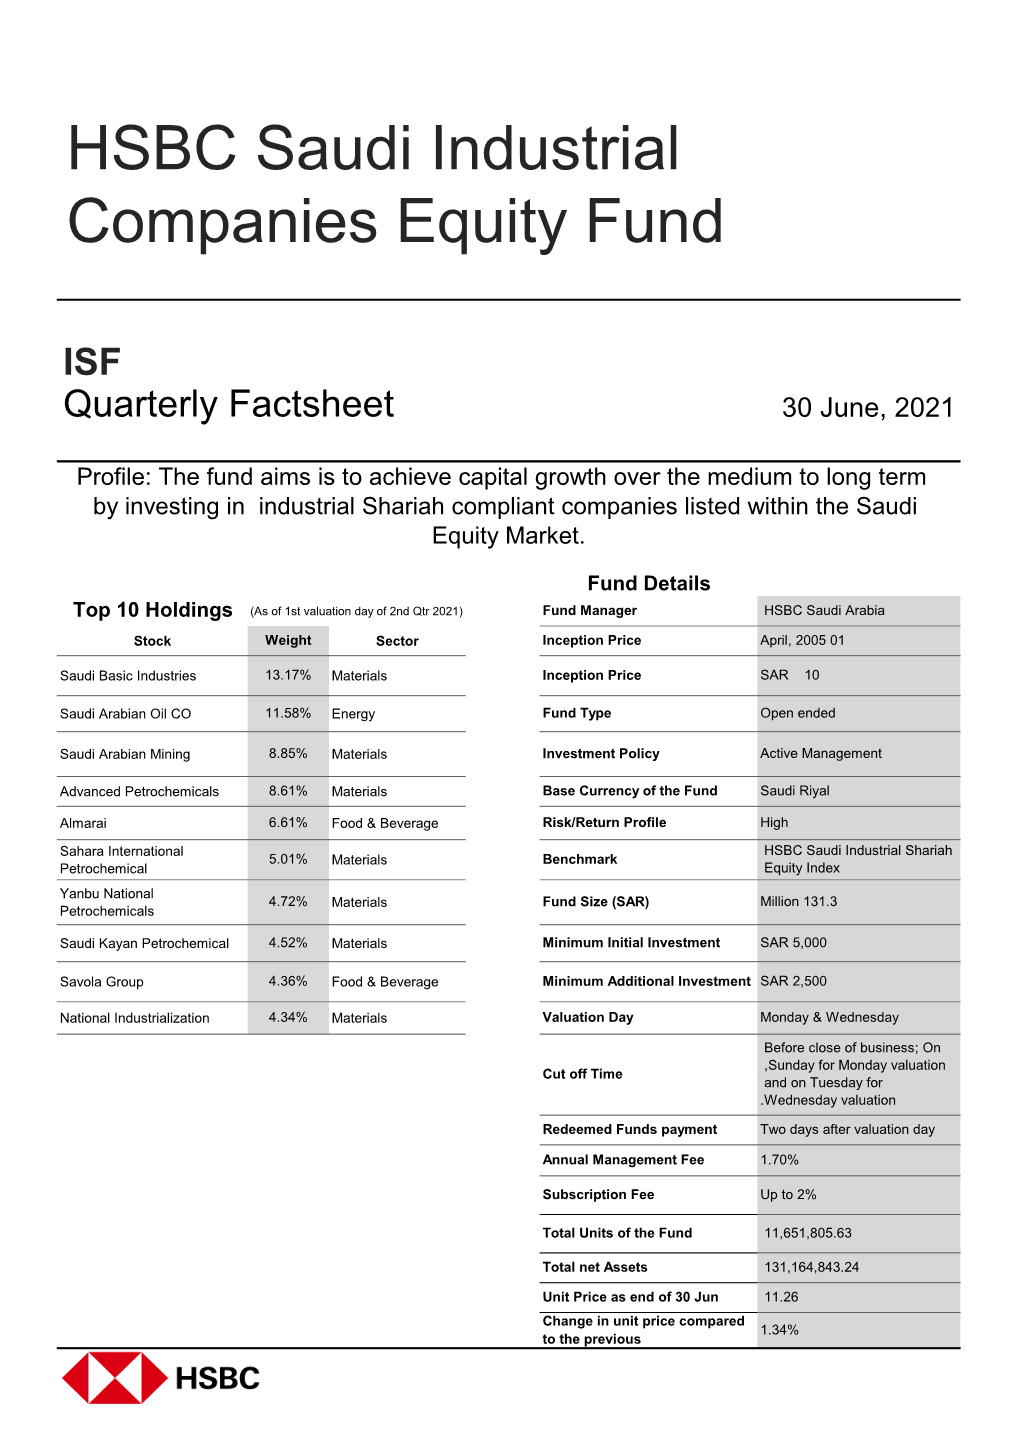 HSBC Saudi Industrial Companies Equity Fund